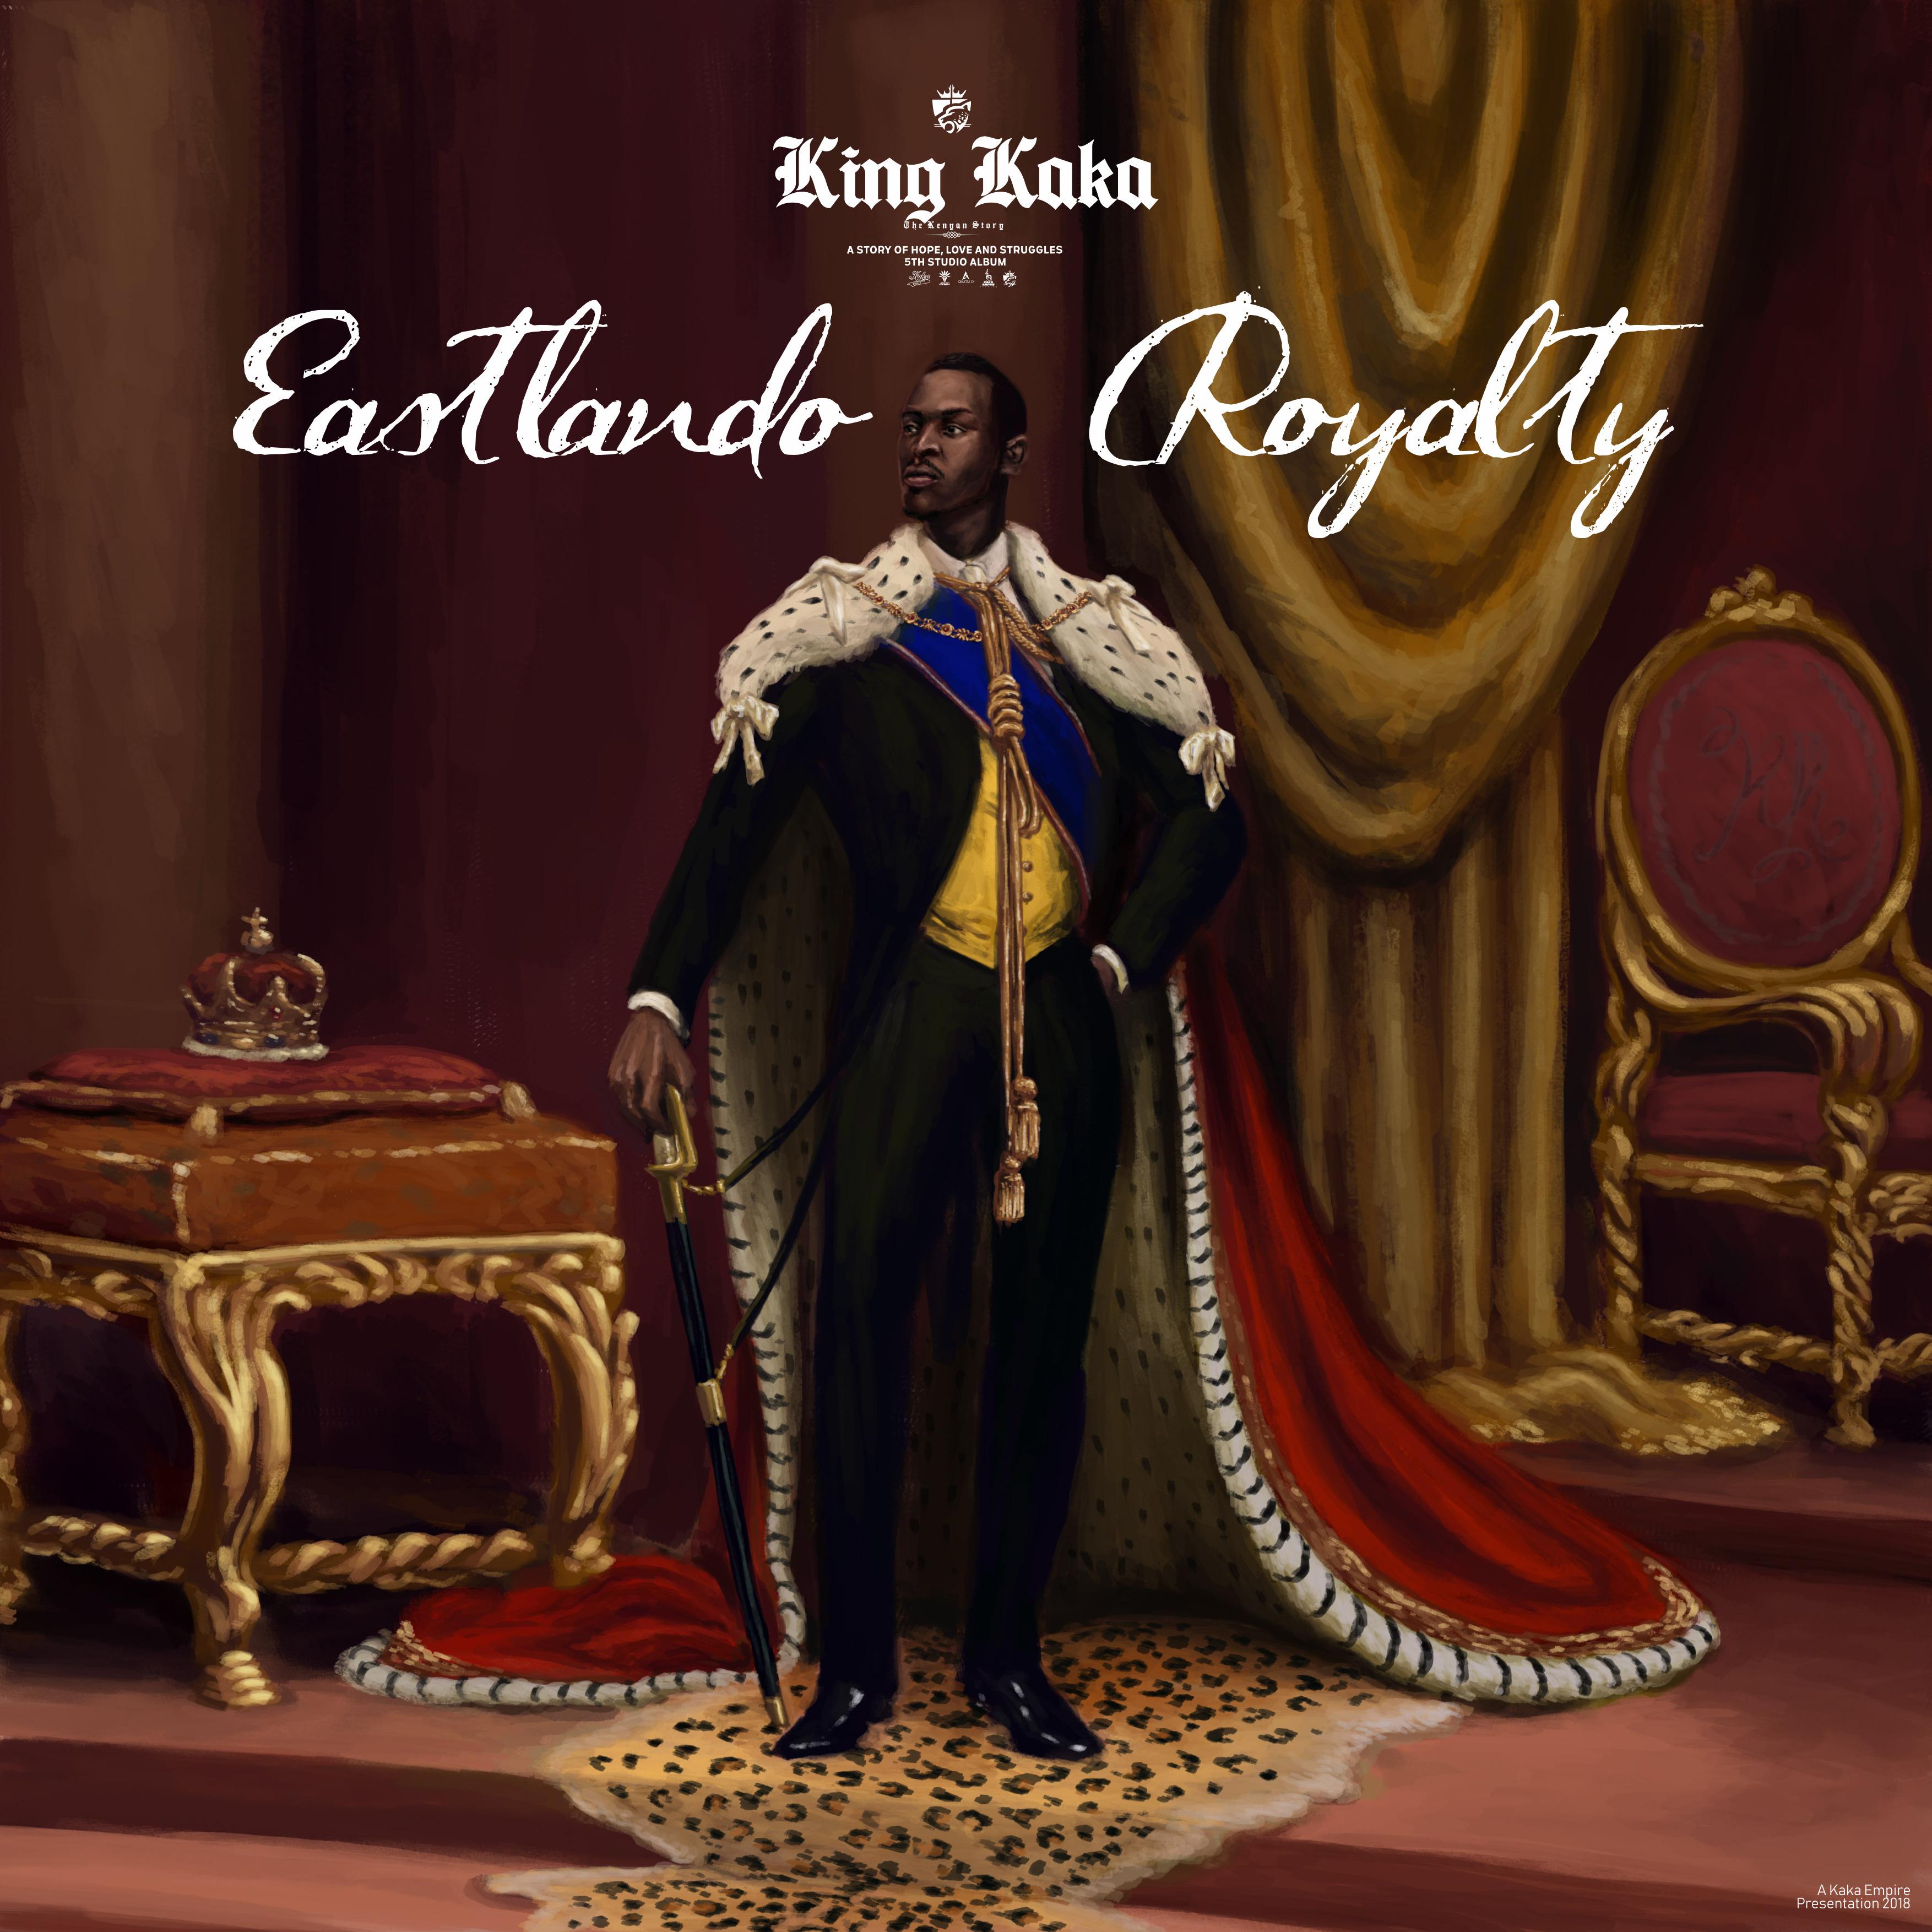 King Kaka - Regula